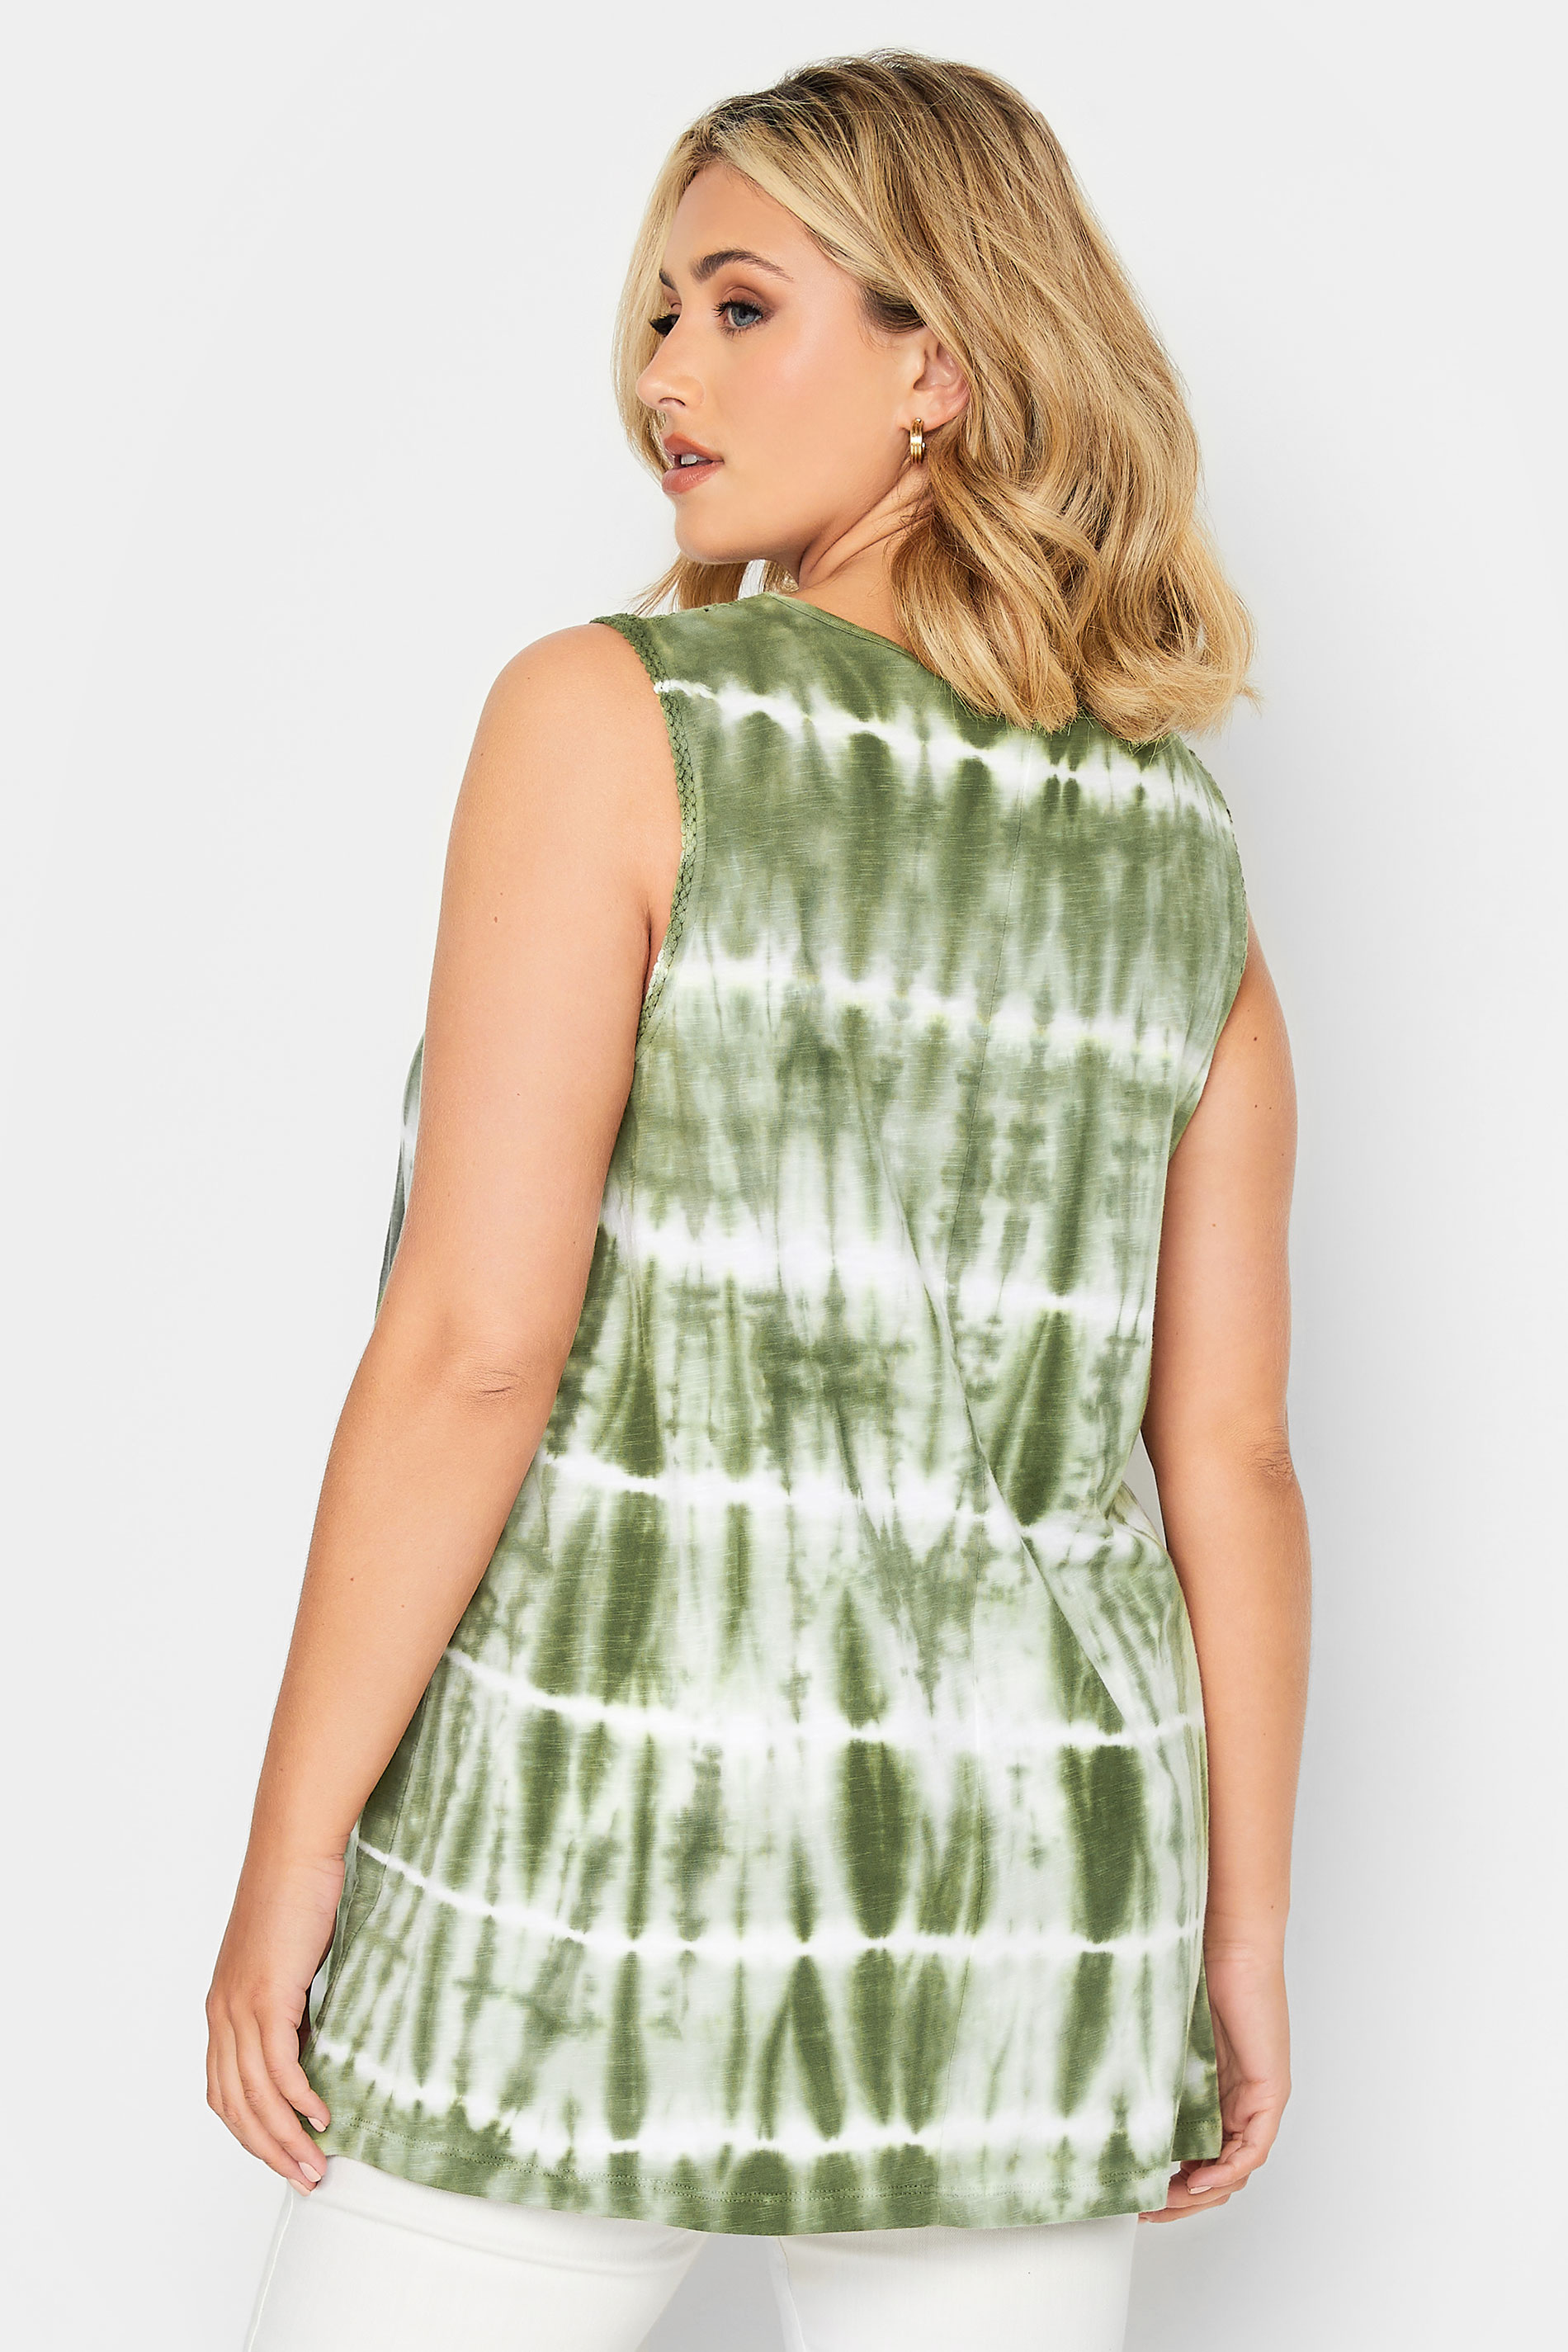 YOURS Plus Size Green Tie Dye Crochet Trim Vest Top | Yours Clothing 3